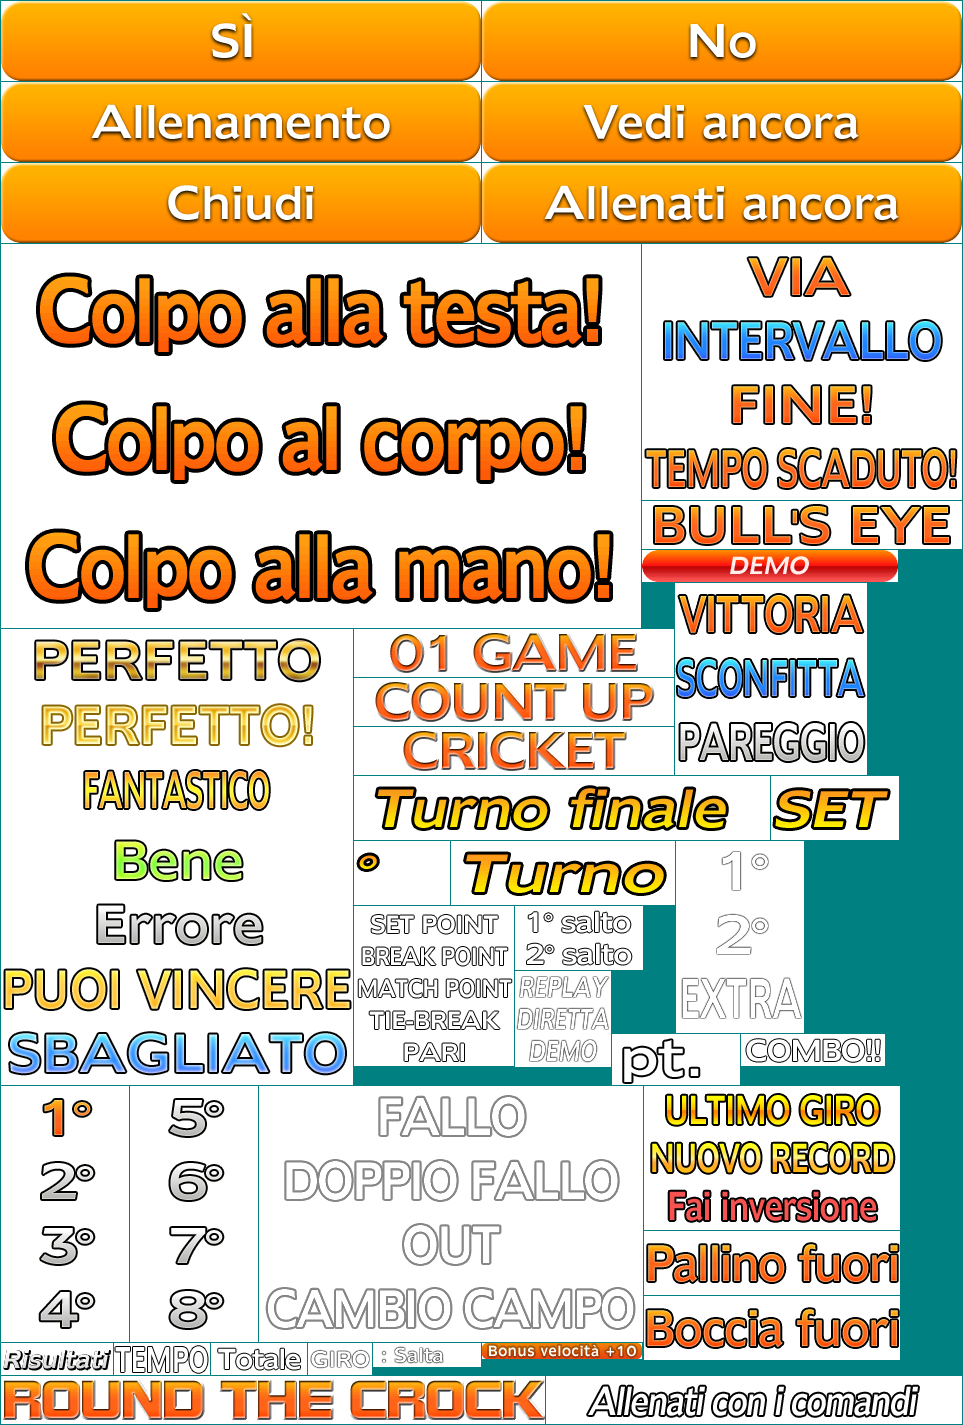 Text (Italian)